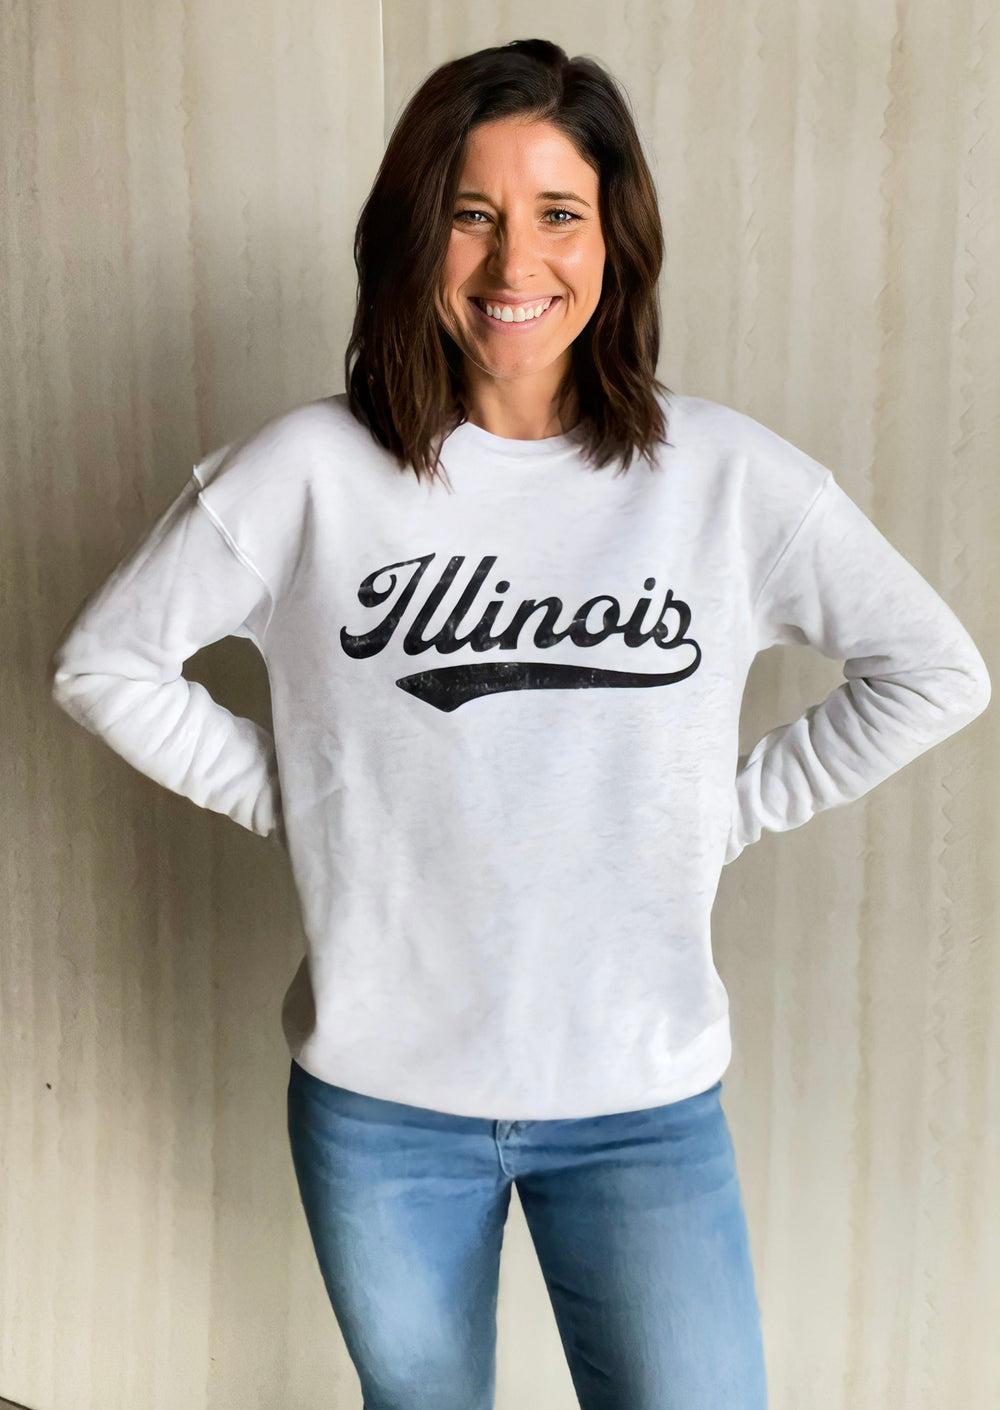 Women's Light Heather Gray Illinois Sweatshirt with black distressed text.